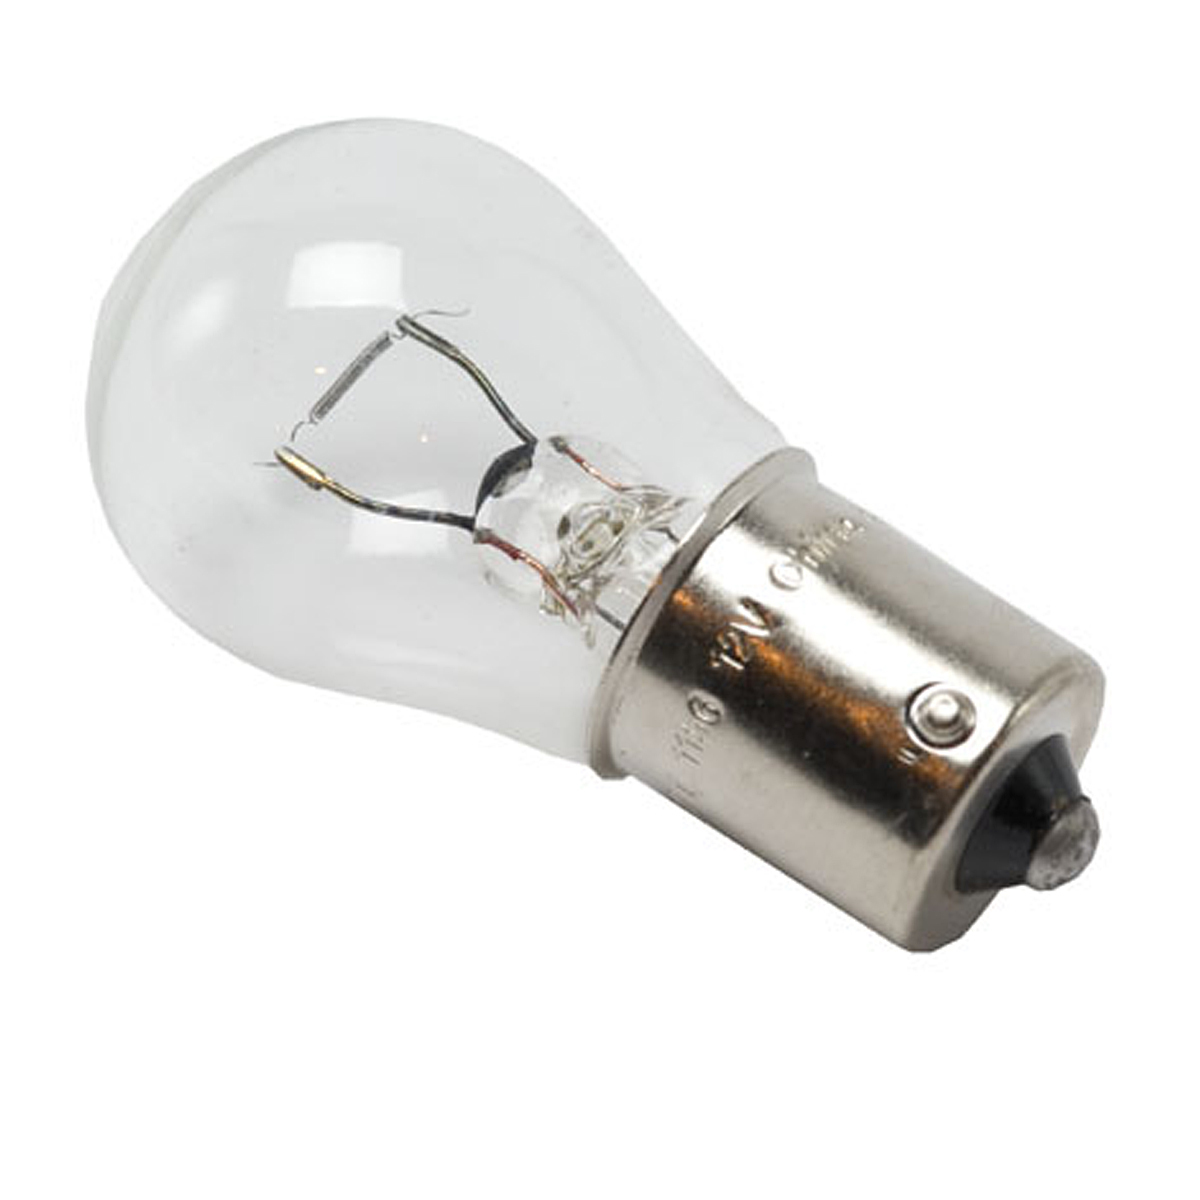 Details about   2 Ex Bright LED light bulbs John Deere JD Oliver headlamp headlight vintage bulb 